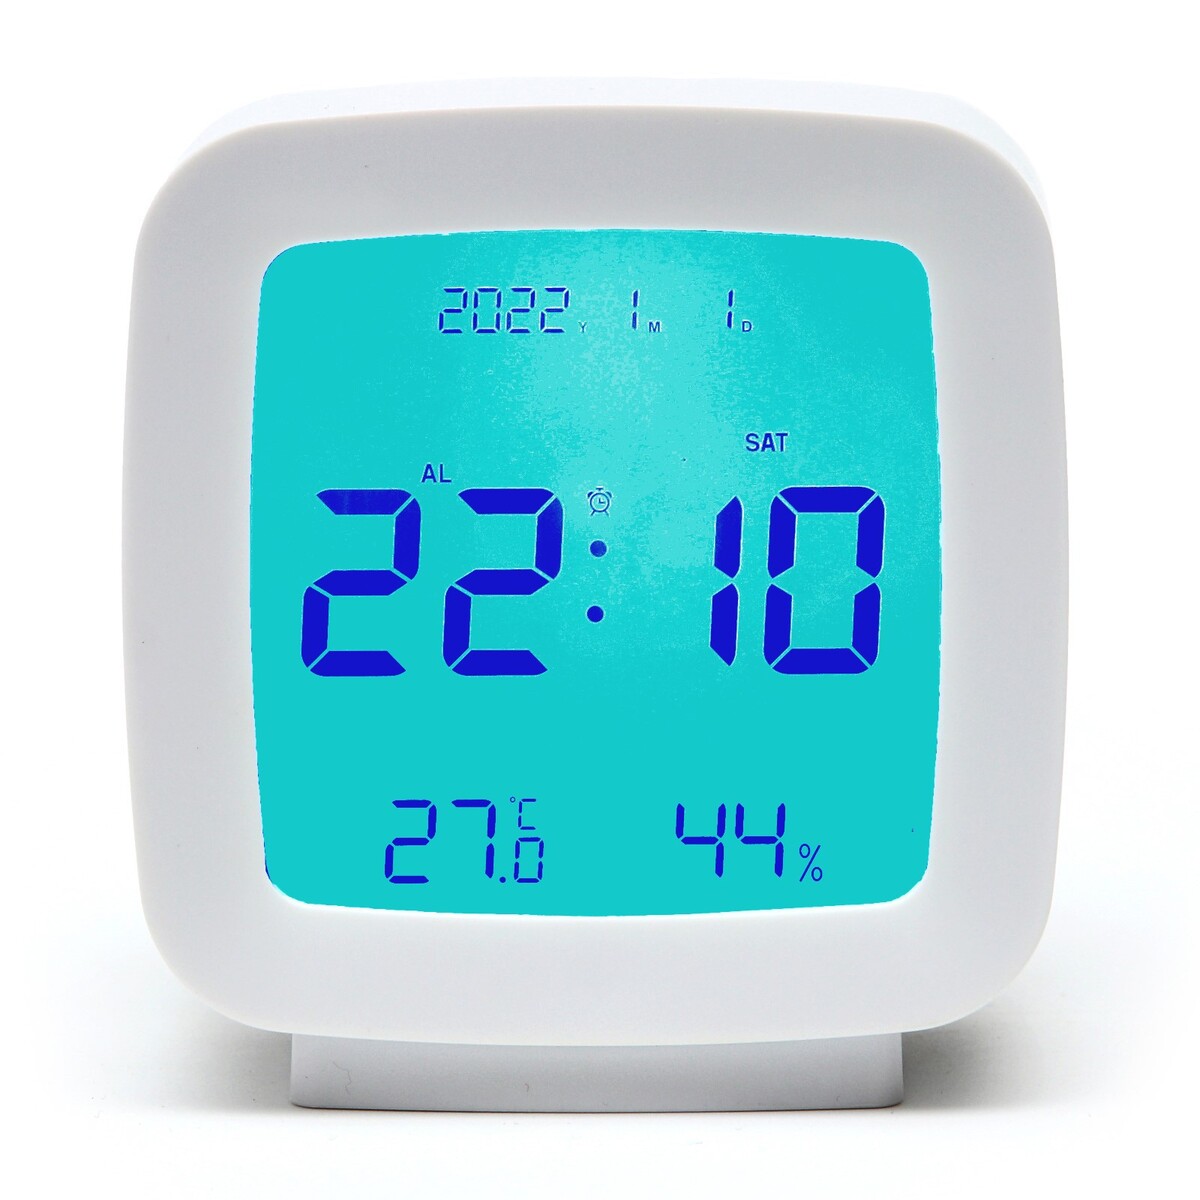 Часы - будильник электронные настольные: термометр, календарь, гигрометр, 7.8 х 8.3 см часы электронные настольные будильник календарь термометр гигрометр 16 8 х 6 6 х 3 6 см